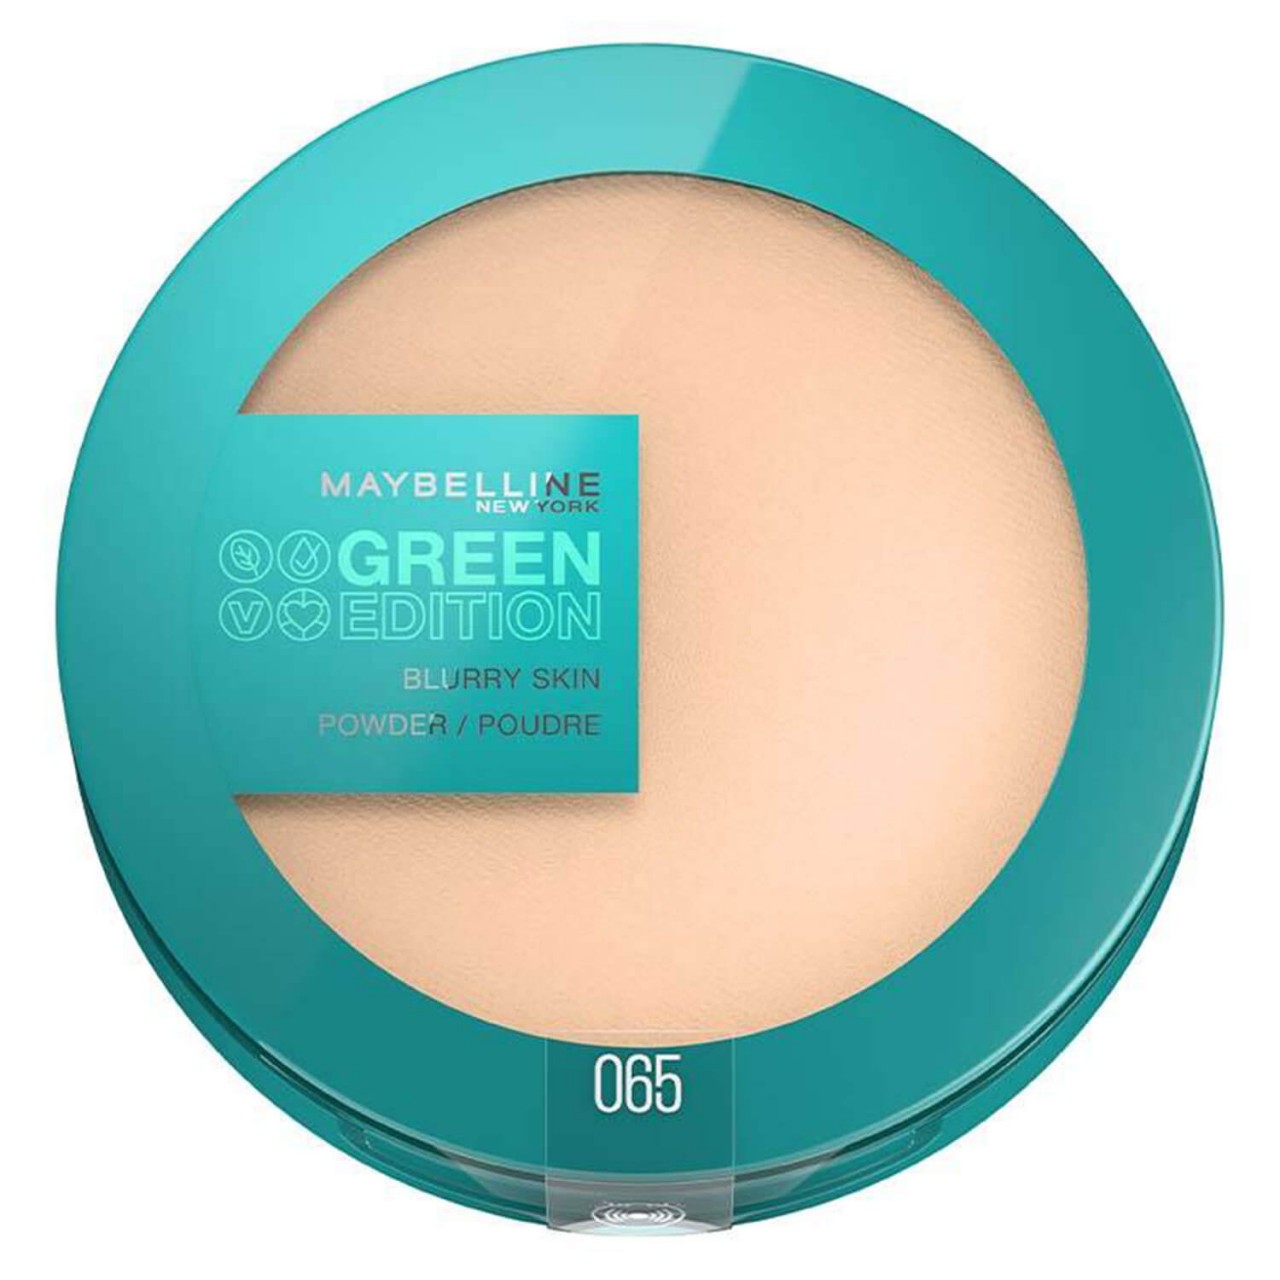 Maybelline NY Teint - Green Edition Blurry Skin Powder 065 von Maybelline New York